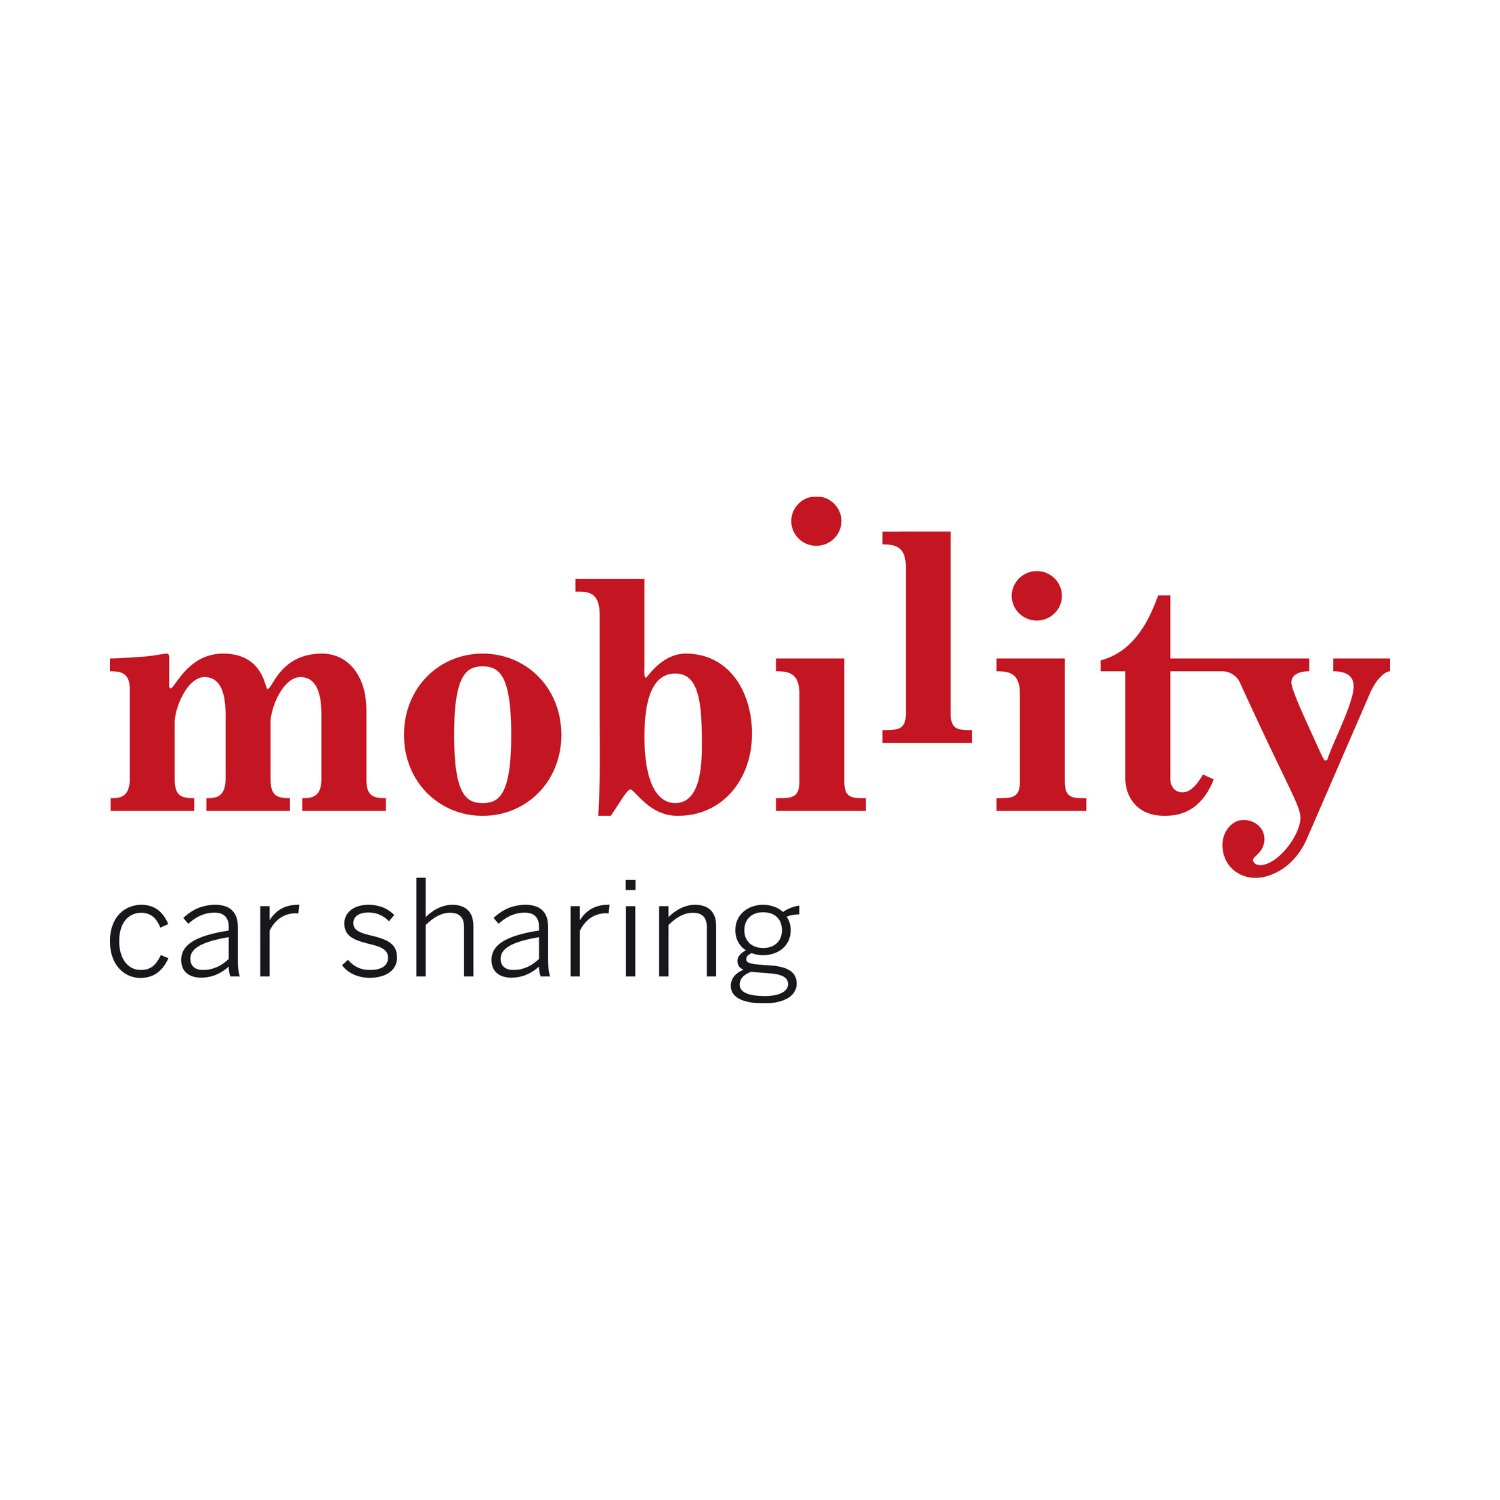 Logo Mobility